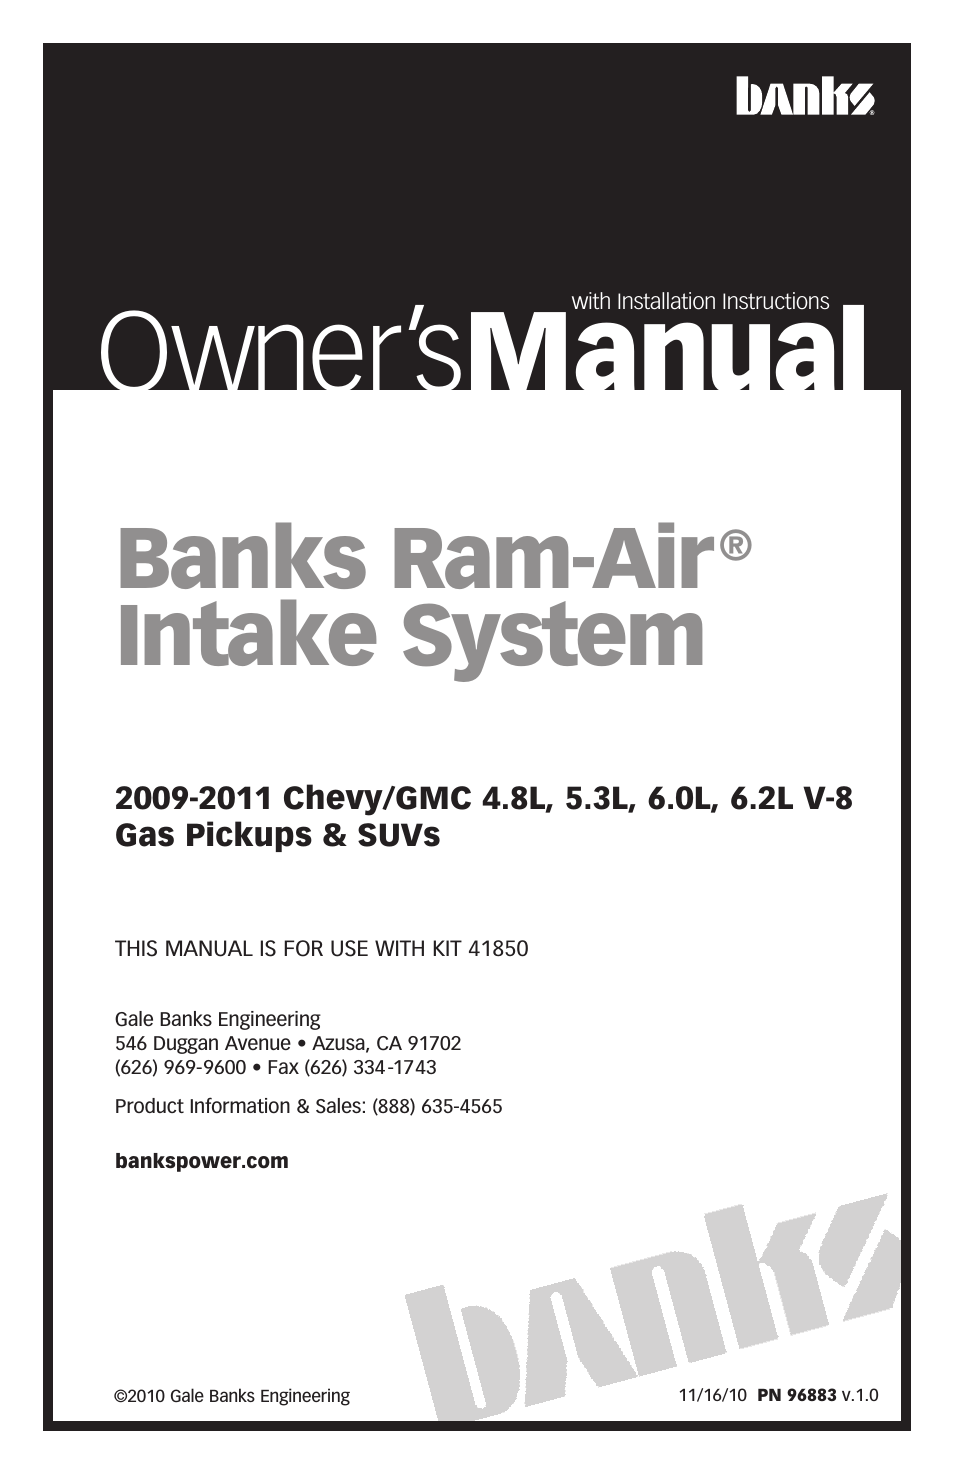 Chevy_GMC Trucks: Gas ’99 - 14 4.3,4.8,5.3,6.0,6.2,8.1 Intake- Ram-Air Intake System '09-11 Chevy-GMC (4.8L, 5.3L, 6.0L, 6.2L) Pickups & SUV